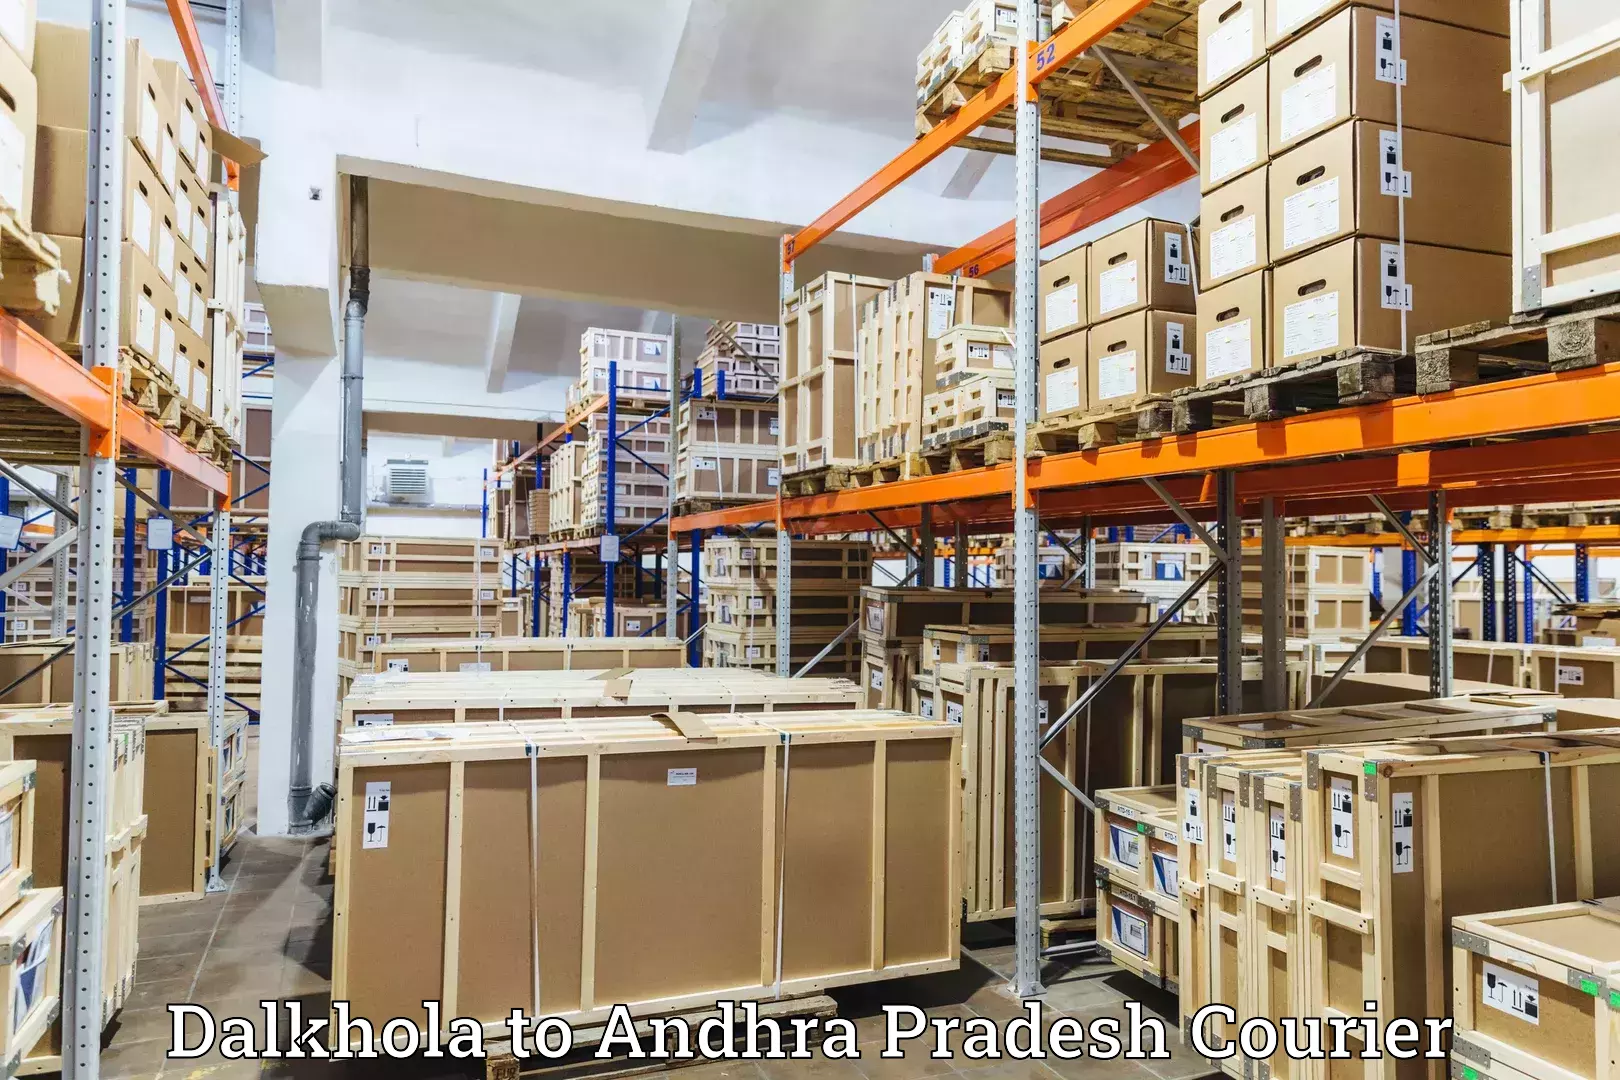 Express logistics providers Dalkhola to Visakhapatnam Port